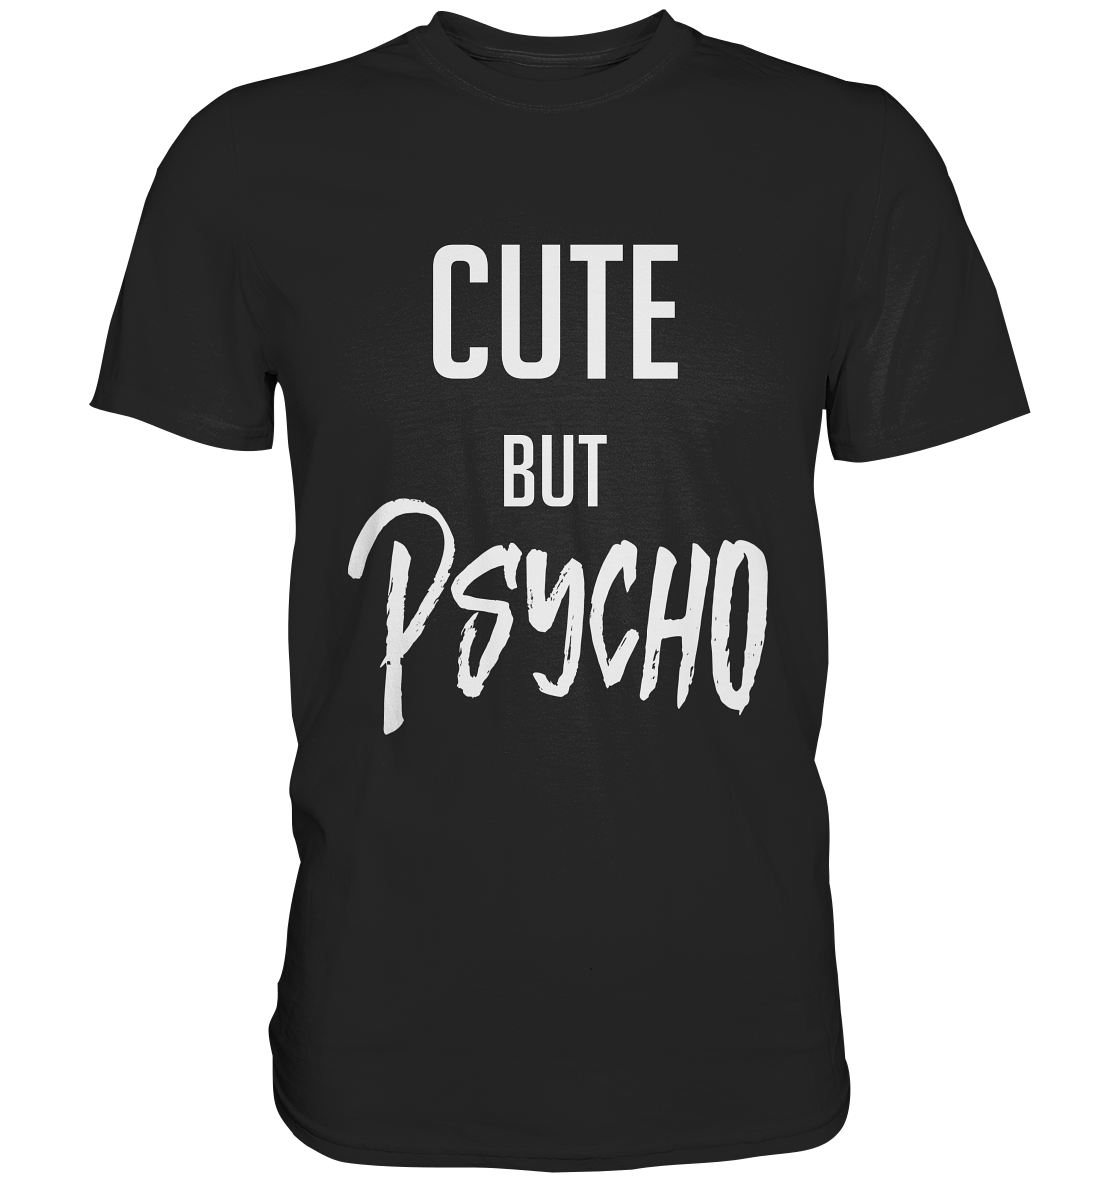 Cute but psycho - Unisex Premium Shirt